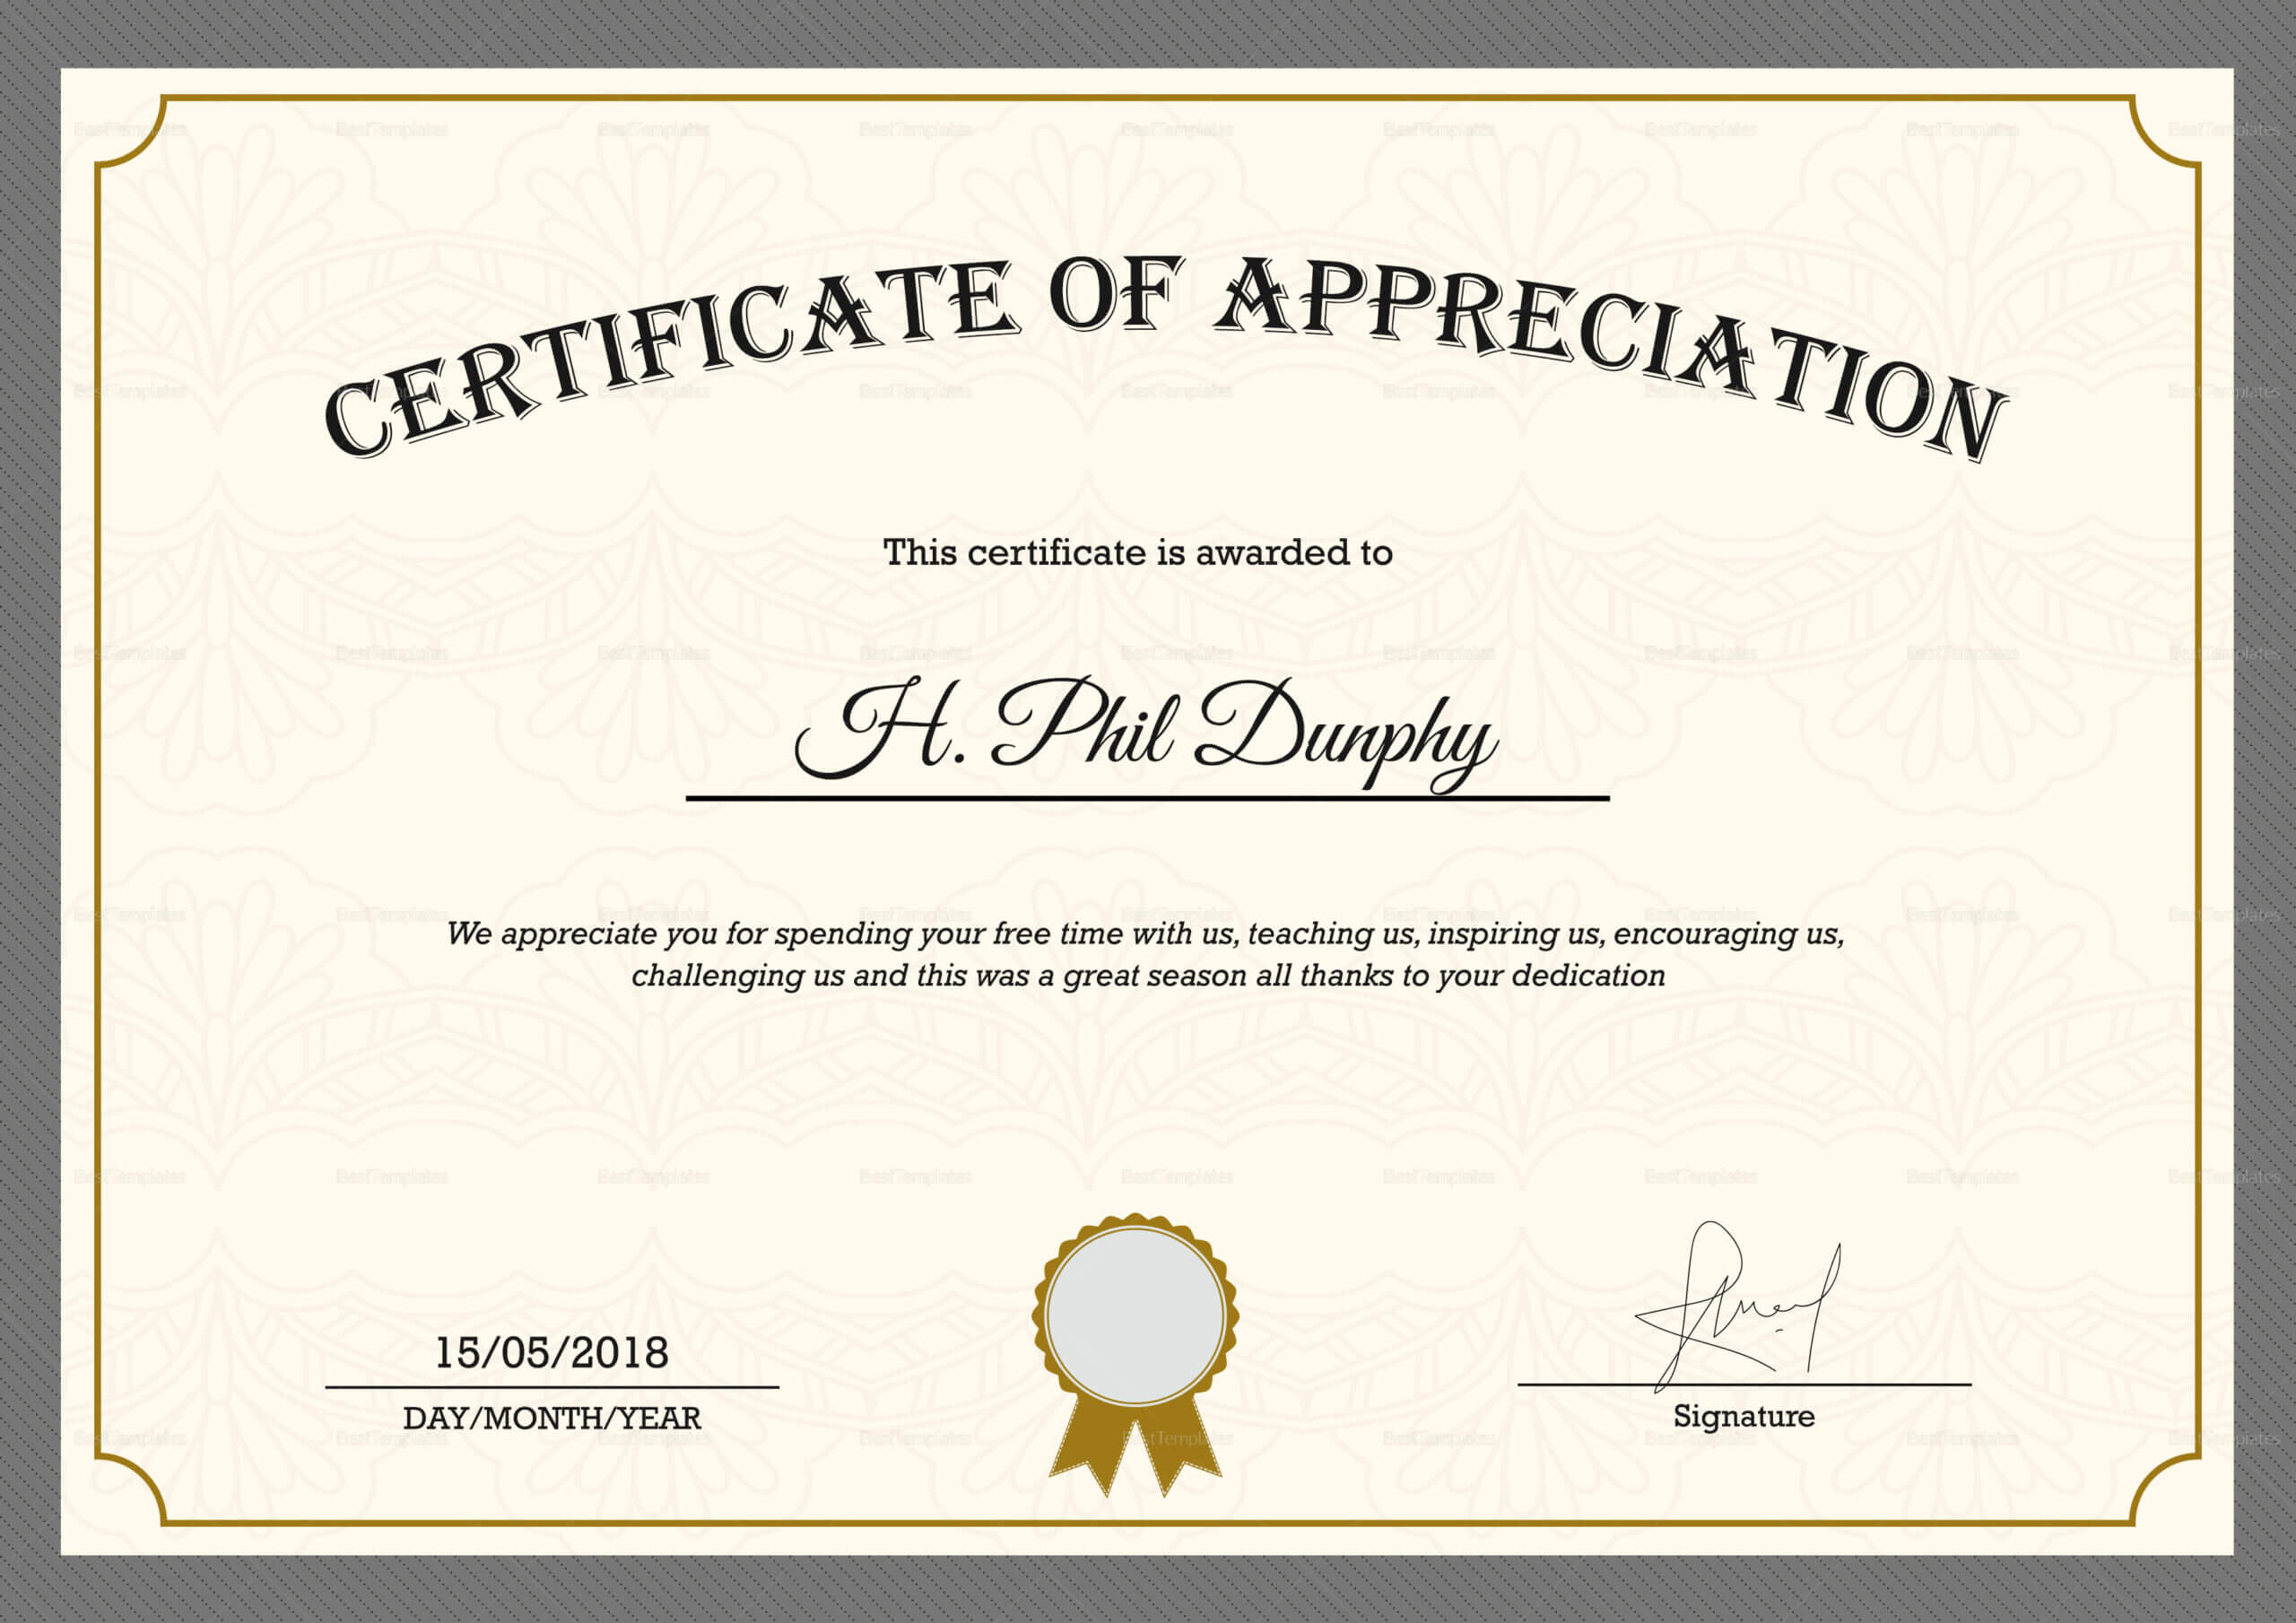 Sample Company Appreciation Certificate Template Inside In Appreciation Certificate Templates